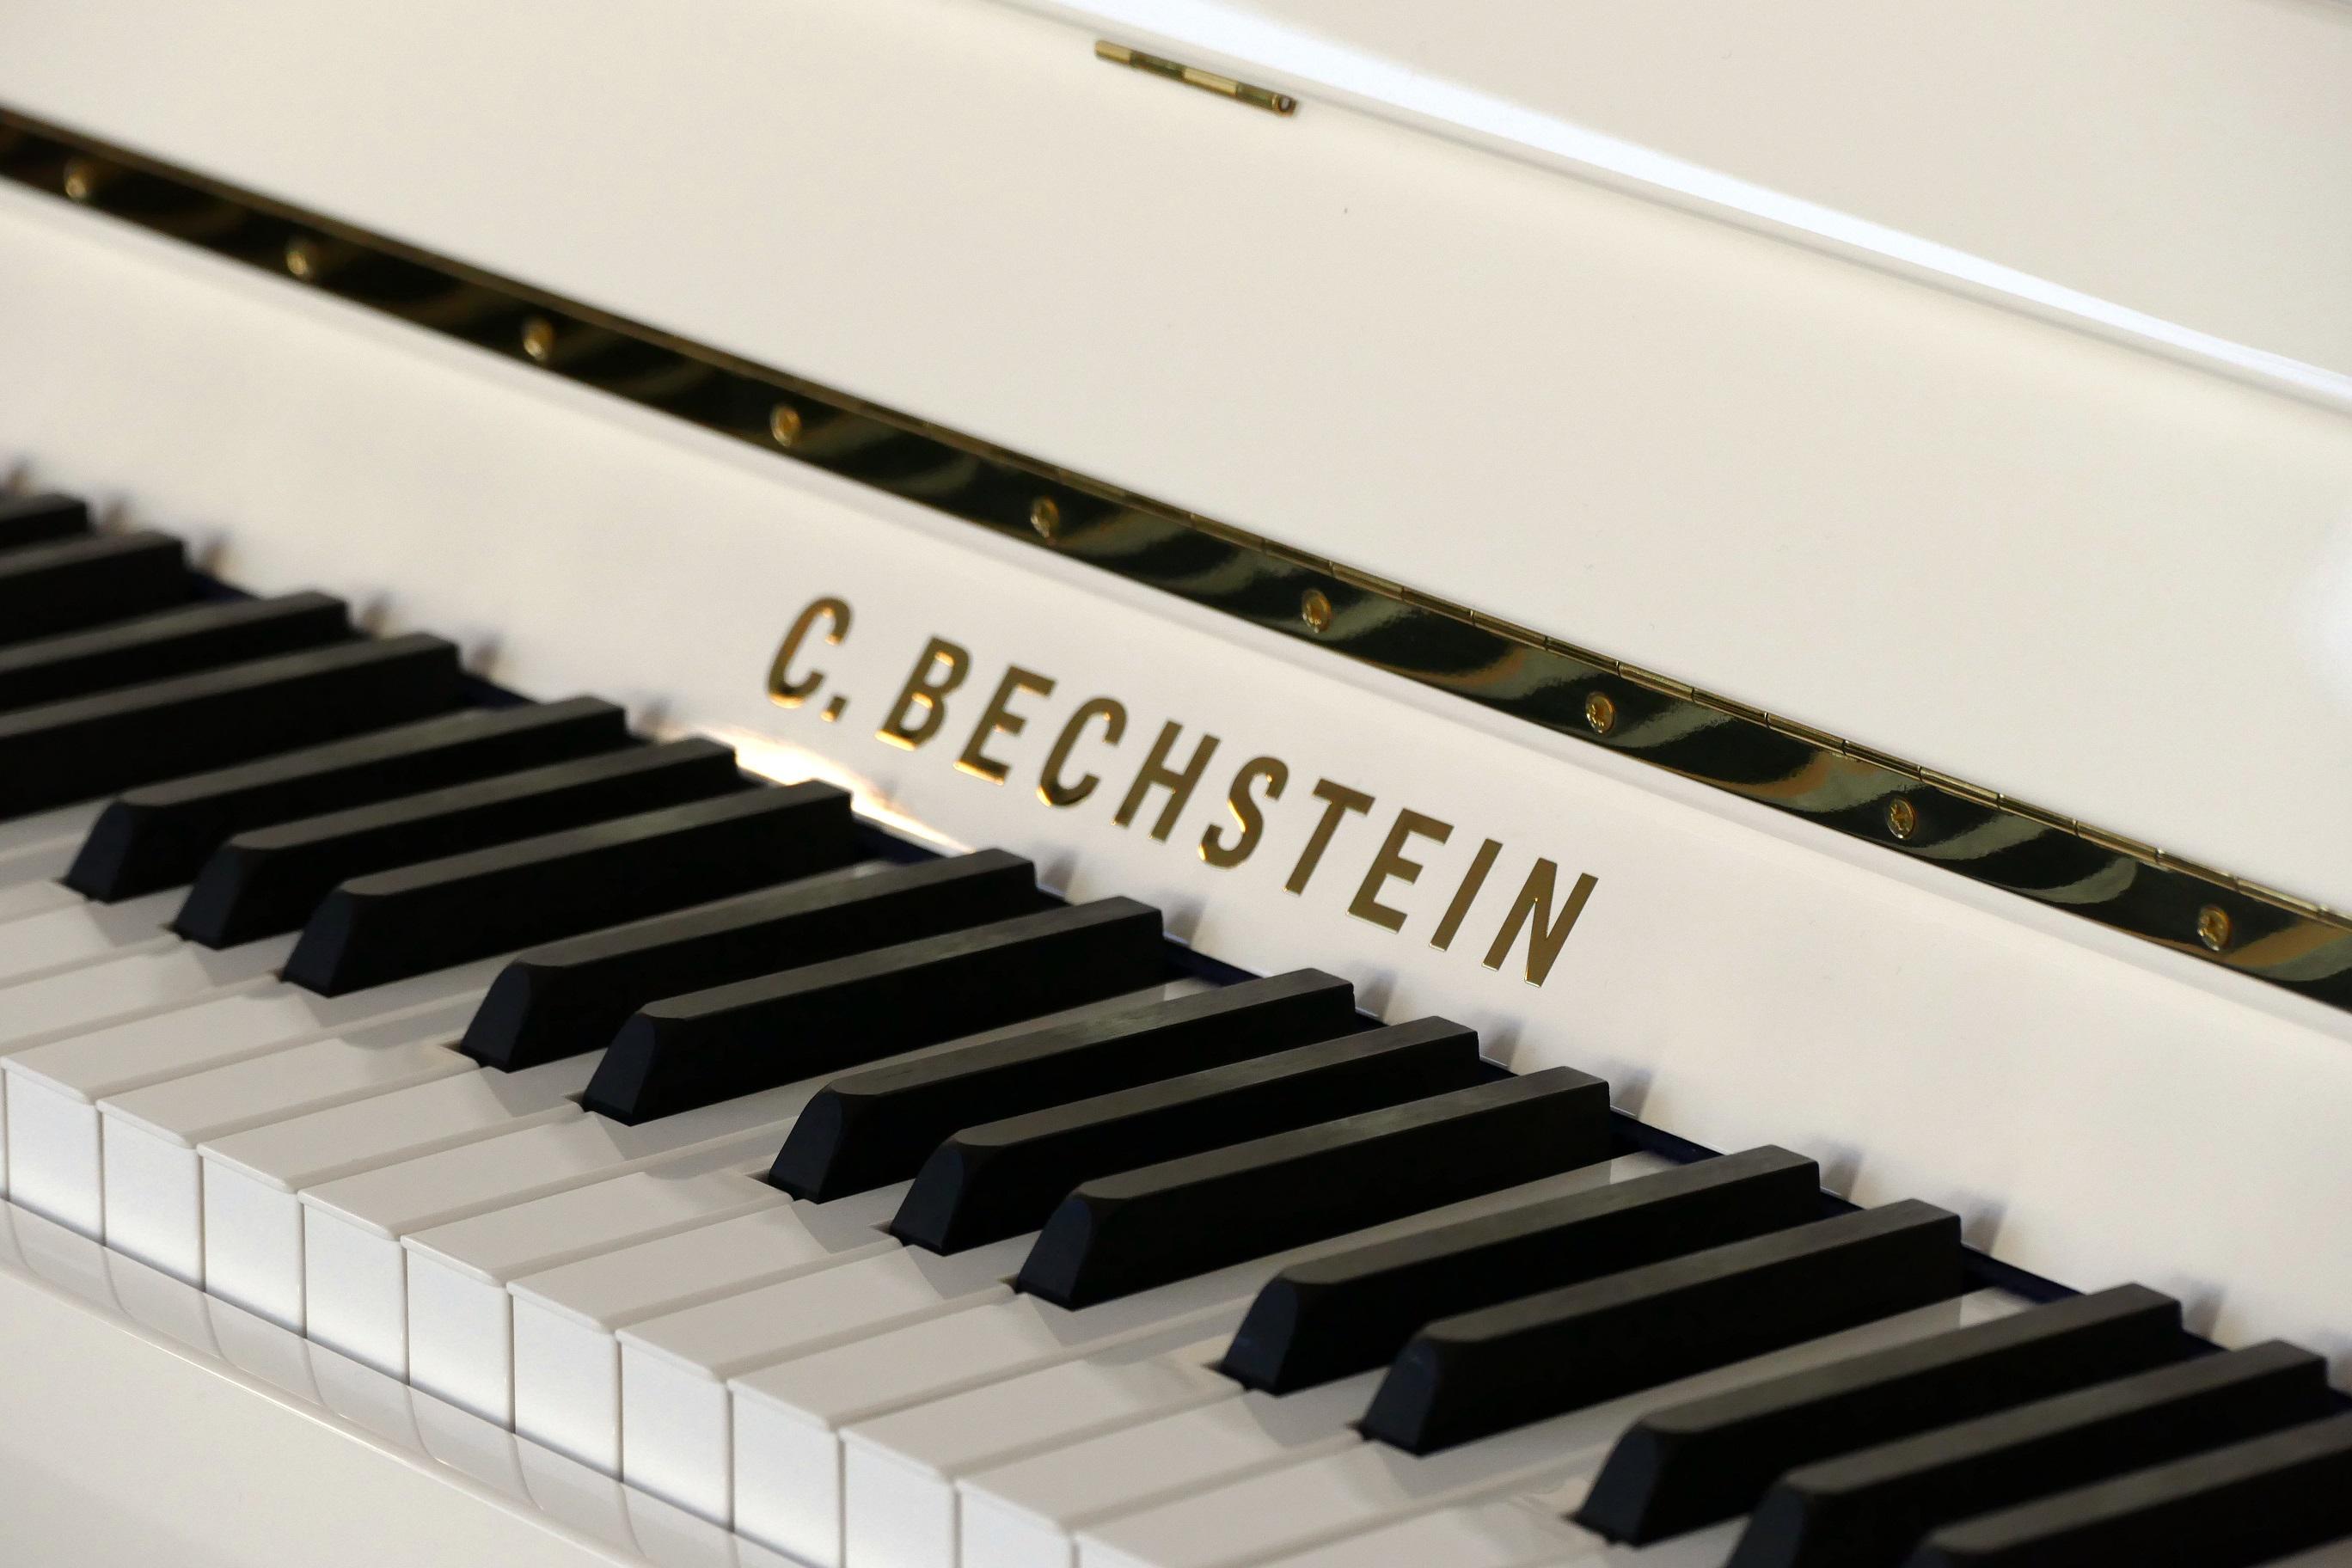 C. Bechstein Klaviere - made in Germany since 1853.